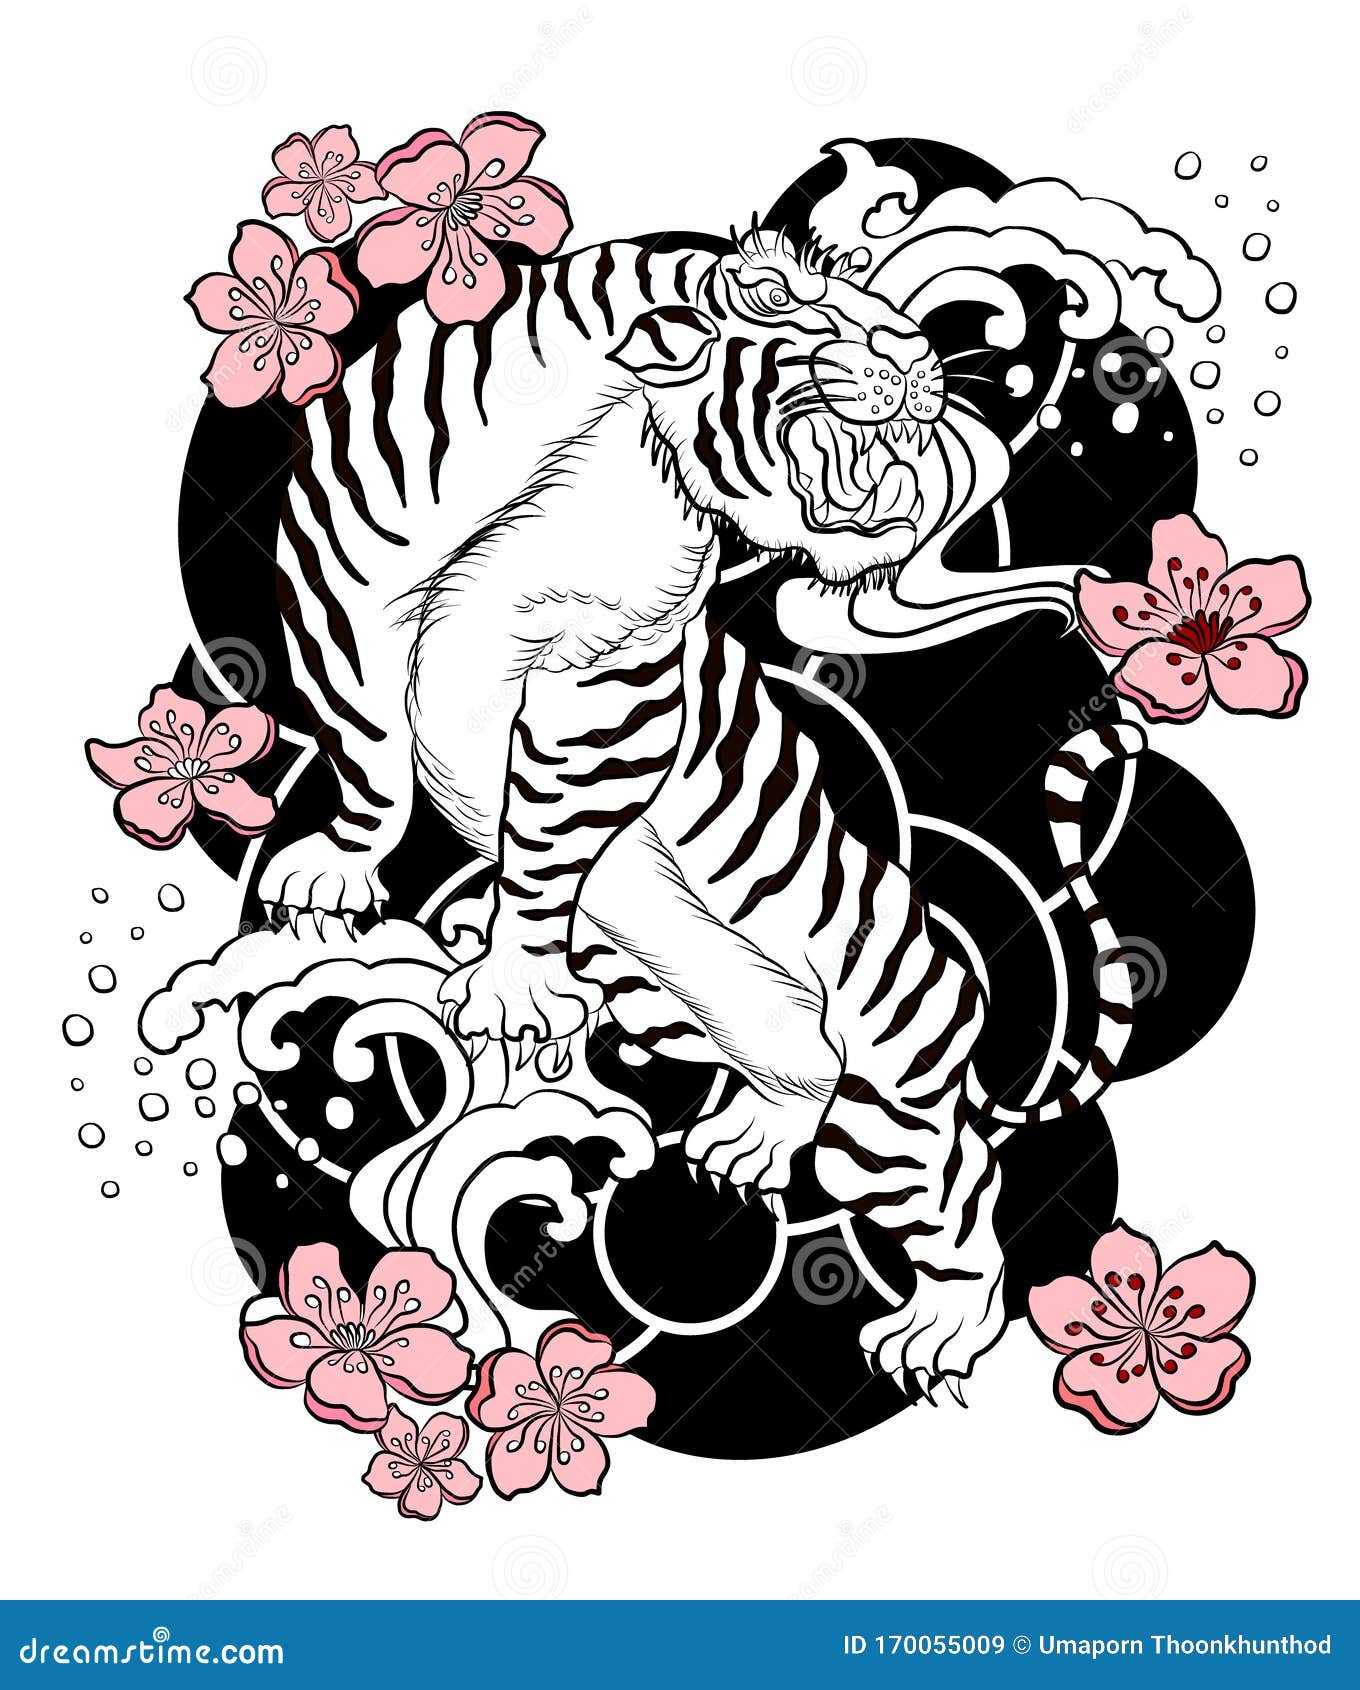 Japanese cherry blossom tattoo design by HellsOriginalAngel on DeviantArt